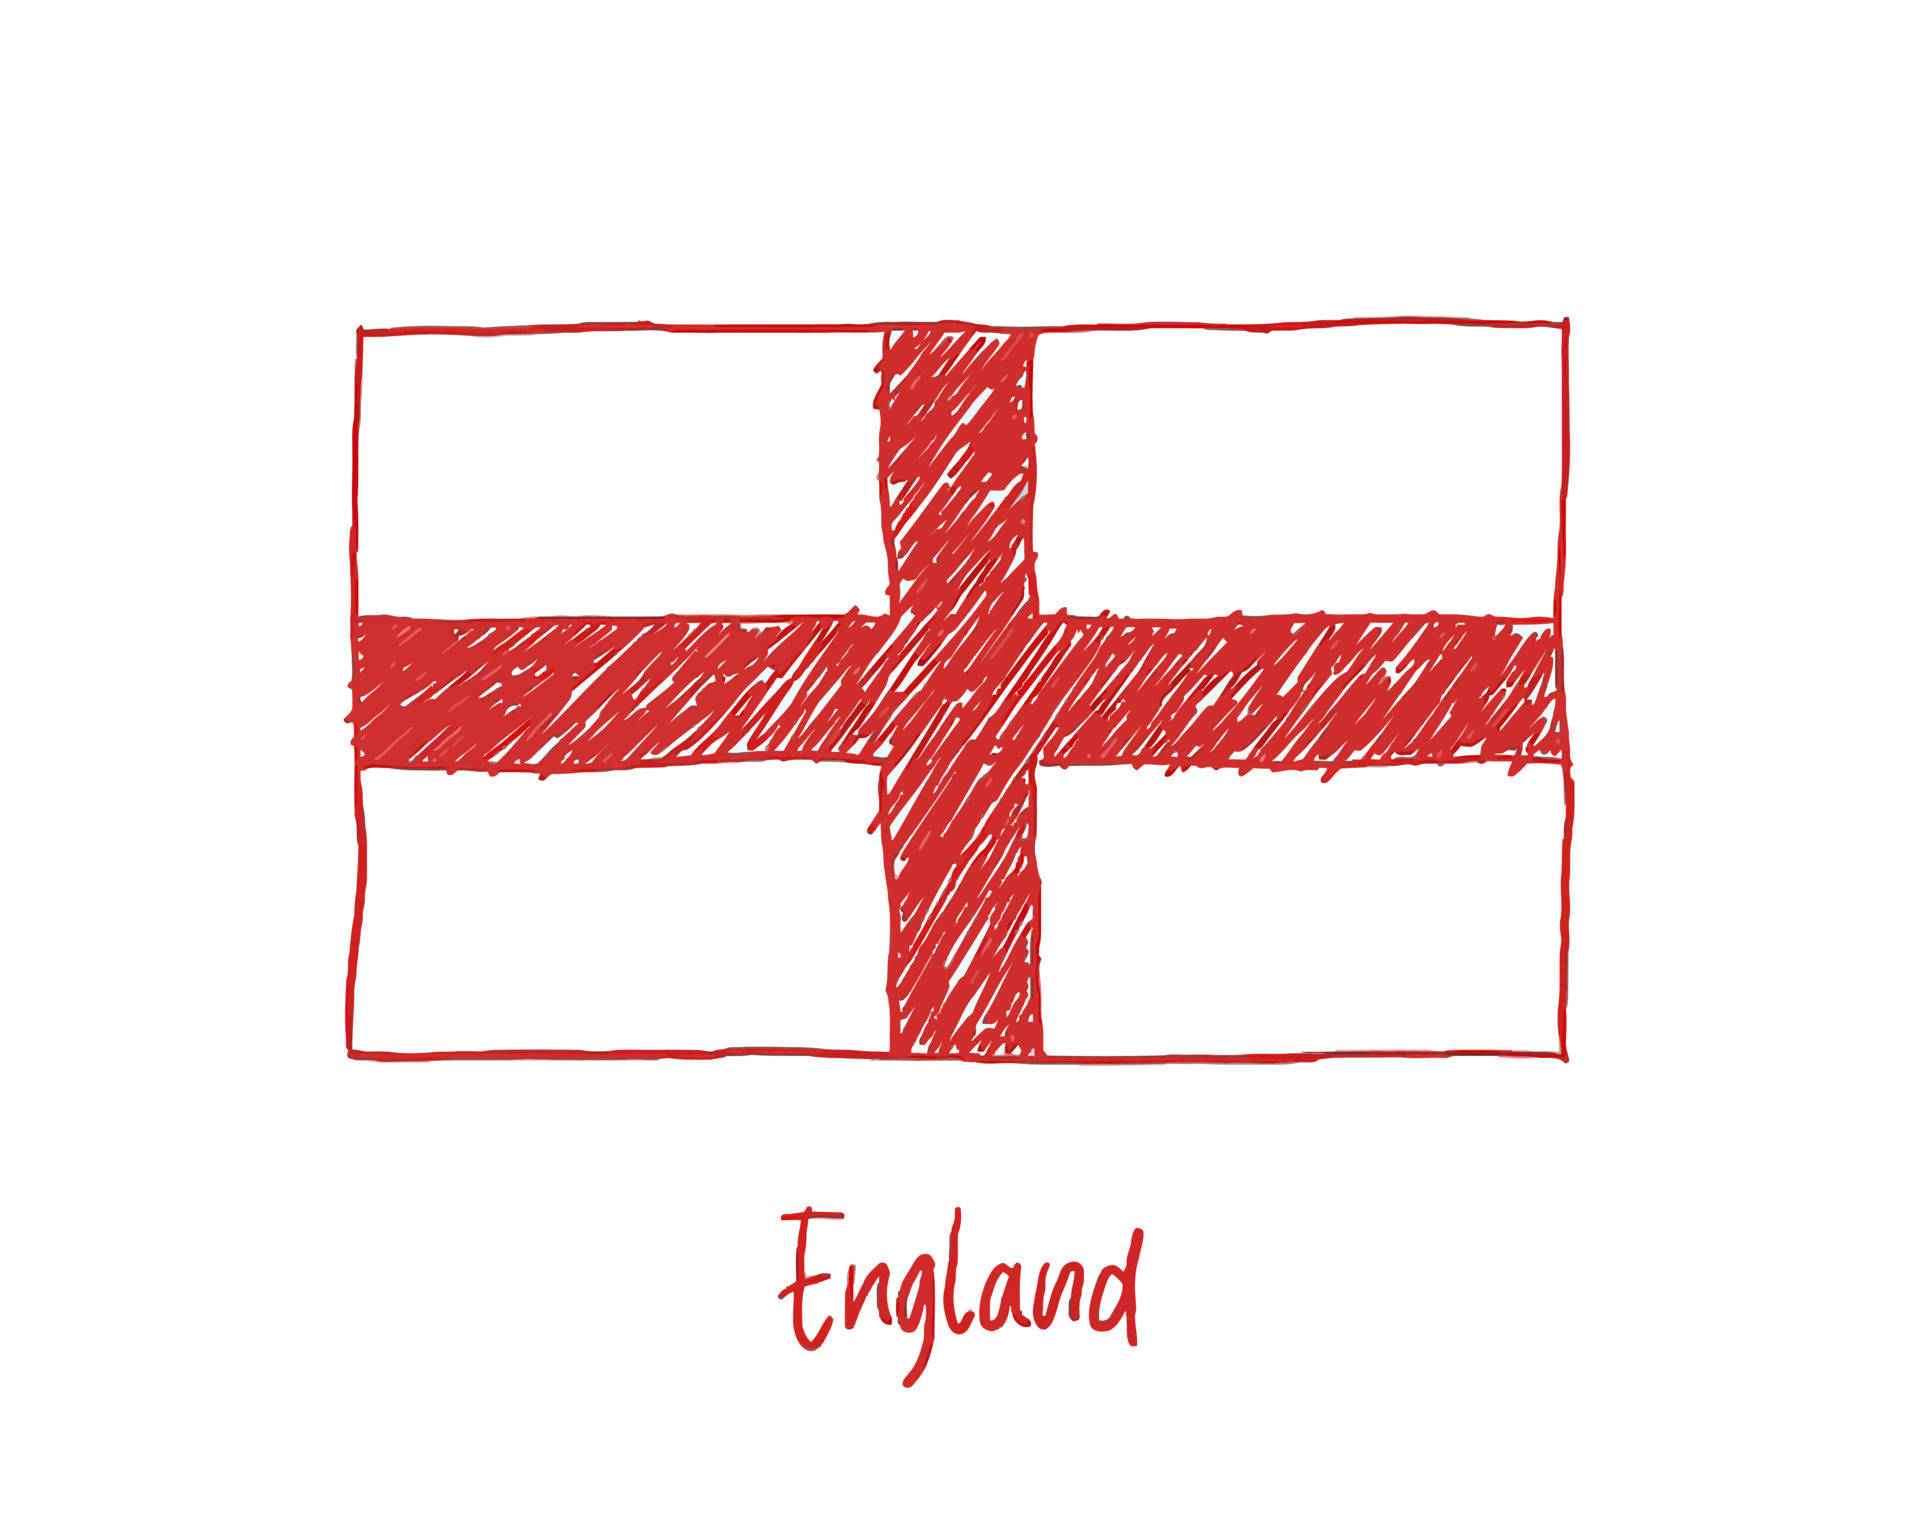 Emblazoned Pride - Artistic representation of the England Flag Wallpaper